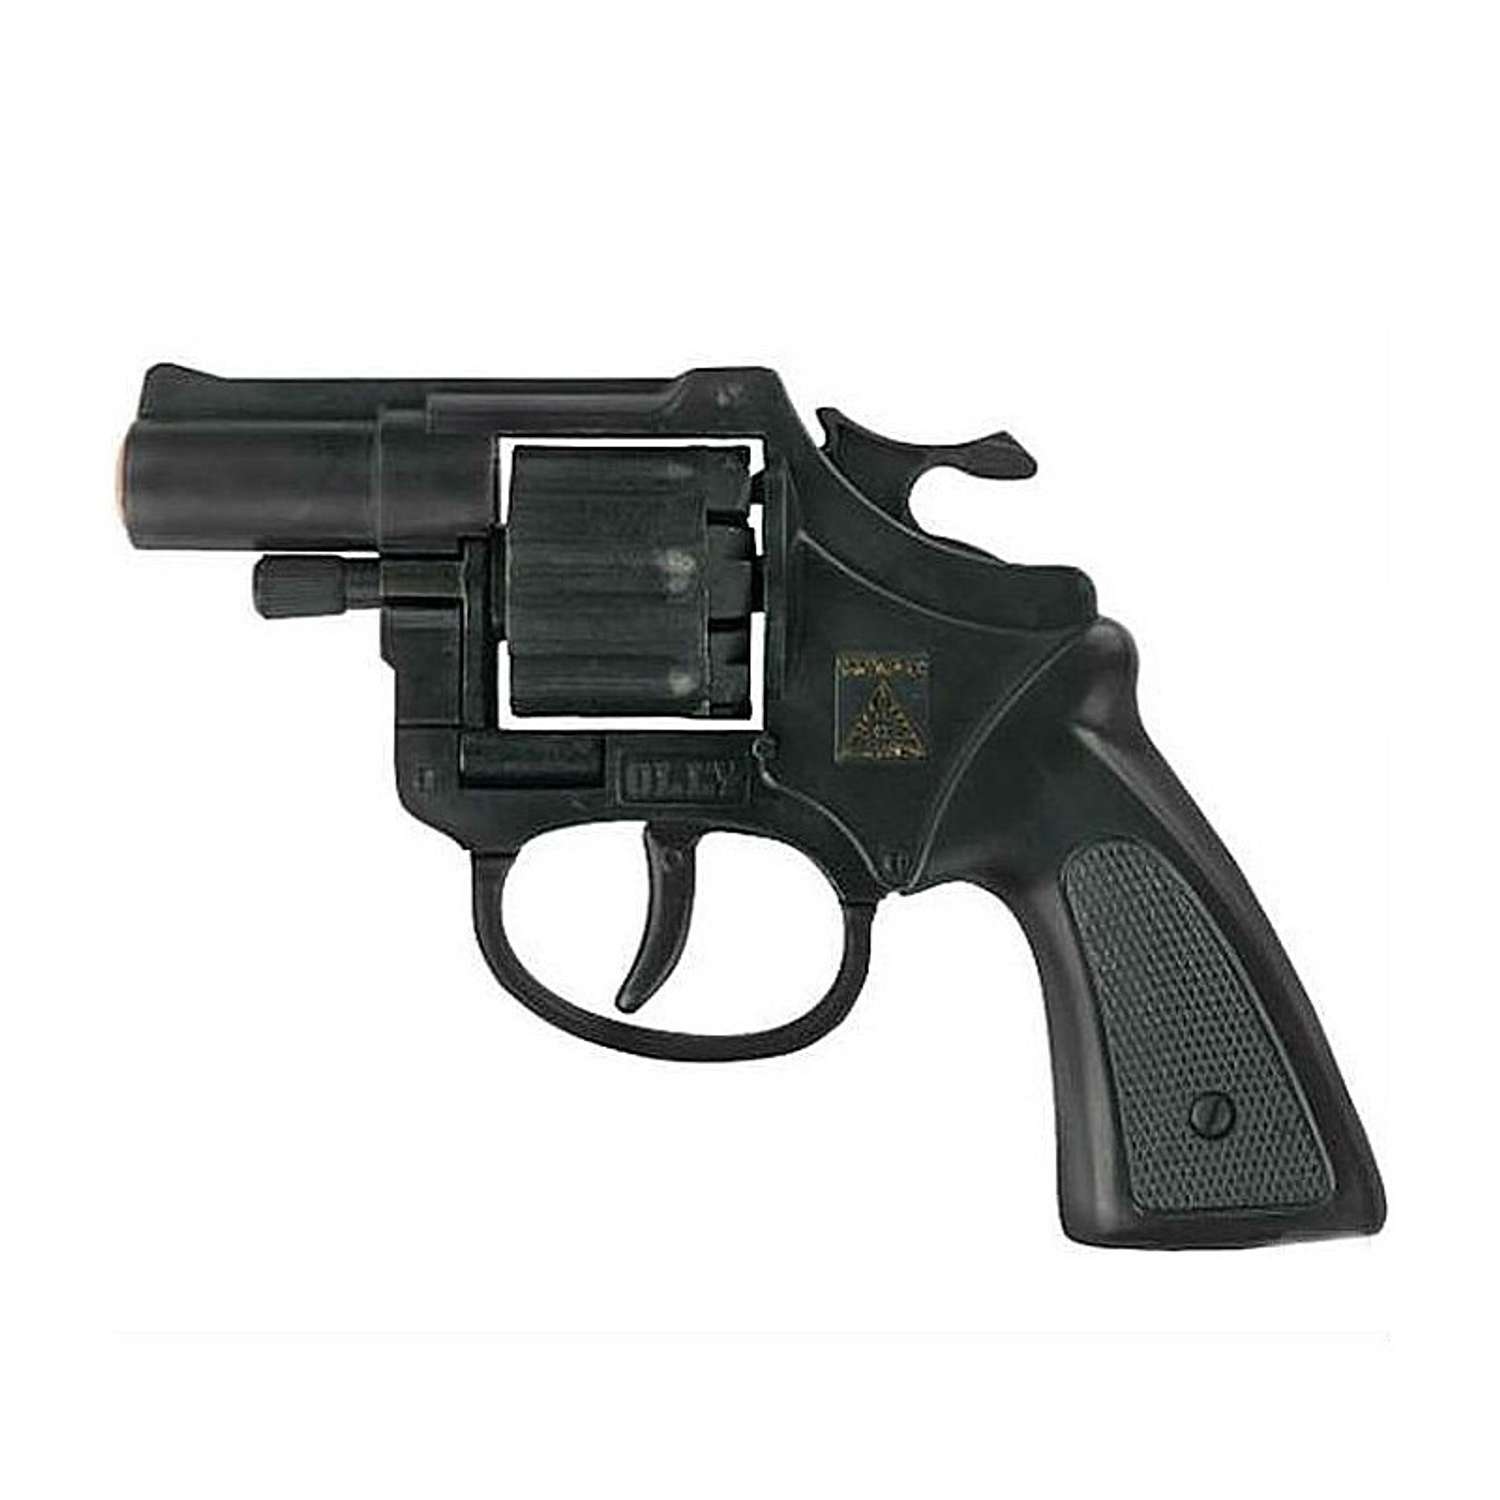 Пистолет Sohni-Wicke Olly 8-заряд gun agent 12,7см - фото 1